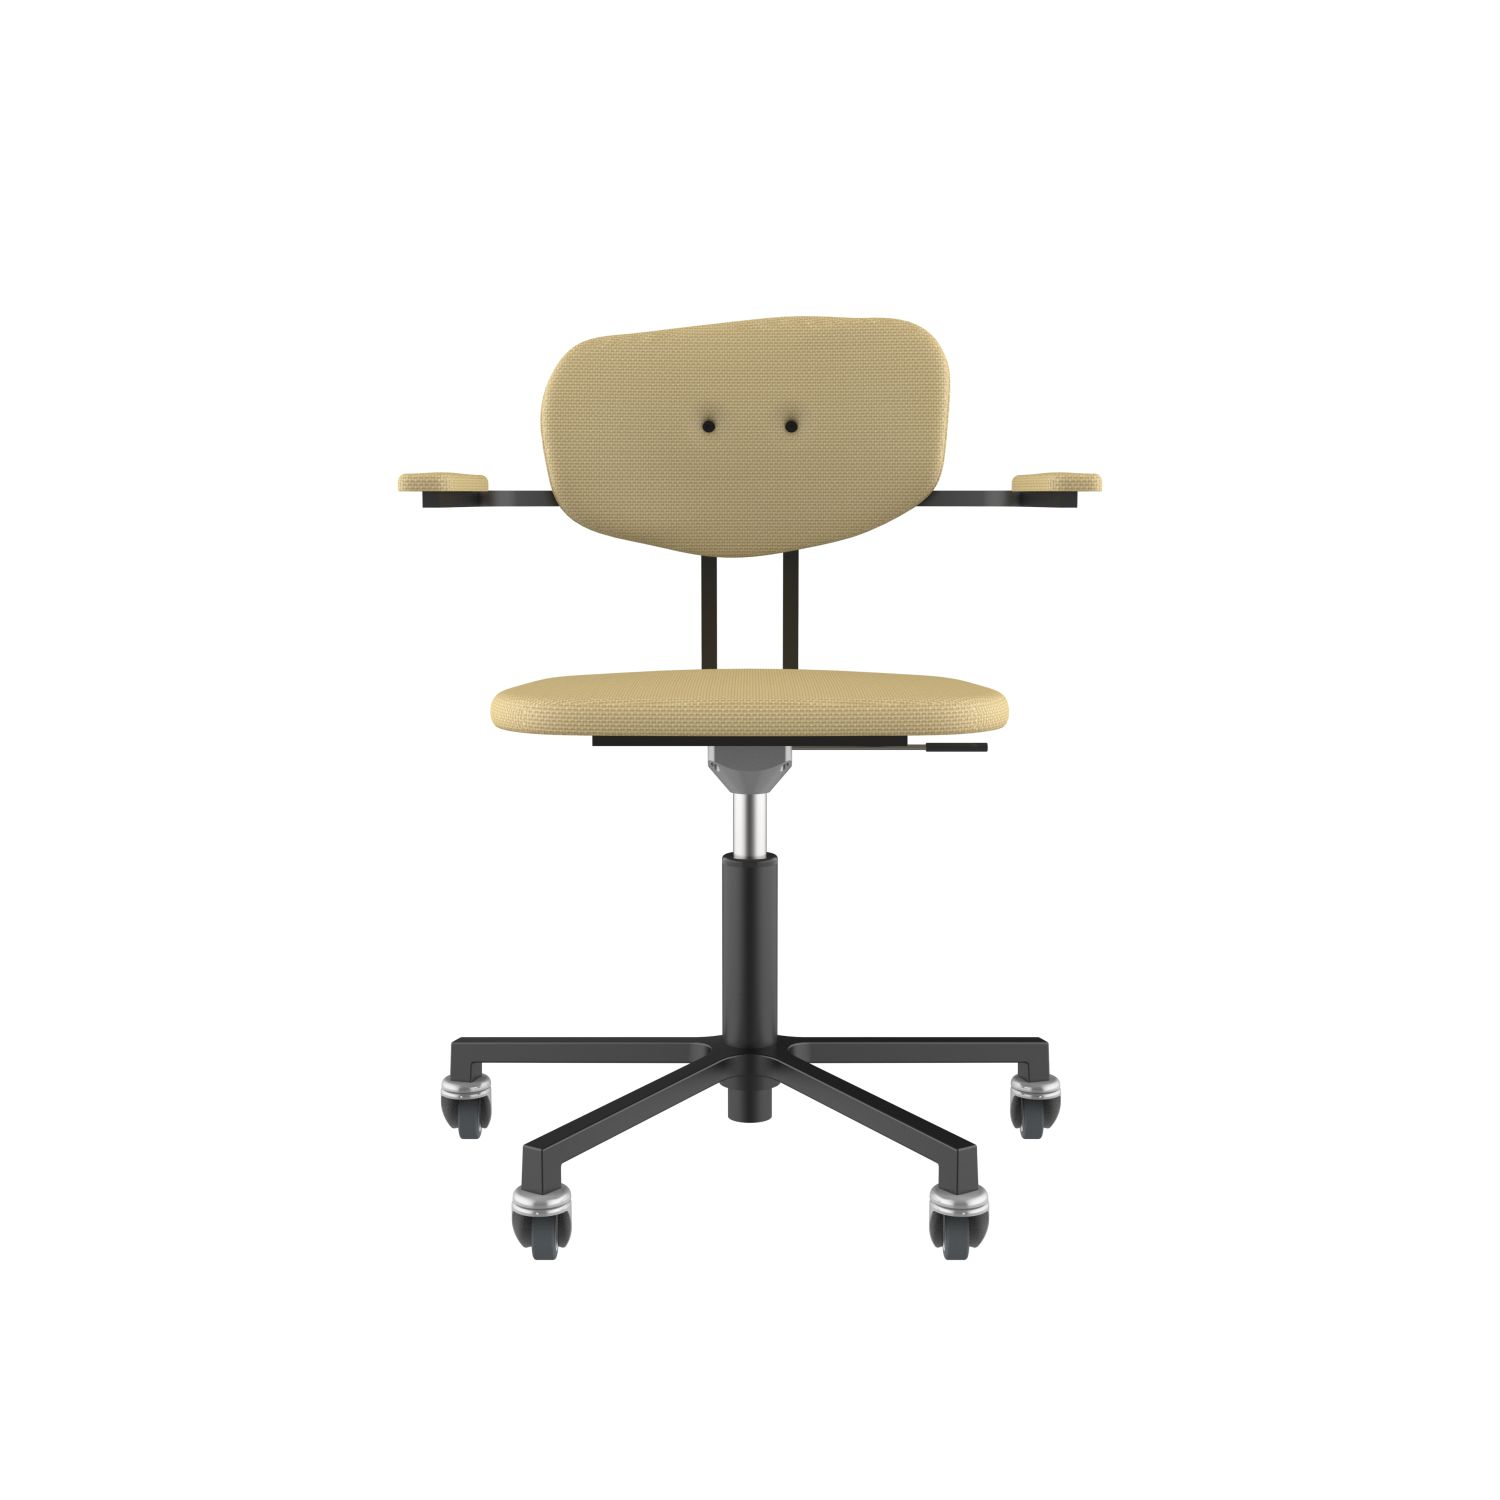 lensvelt maarten baas office chair with armrests backrest c light brown 141 black ral9005 soft wheels